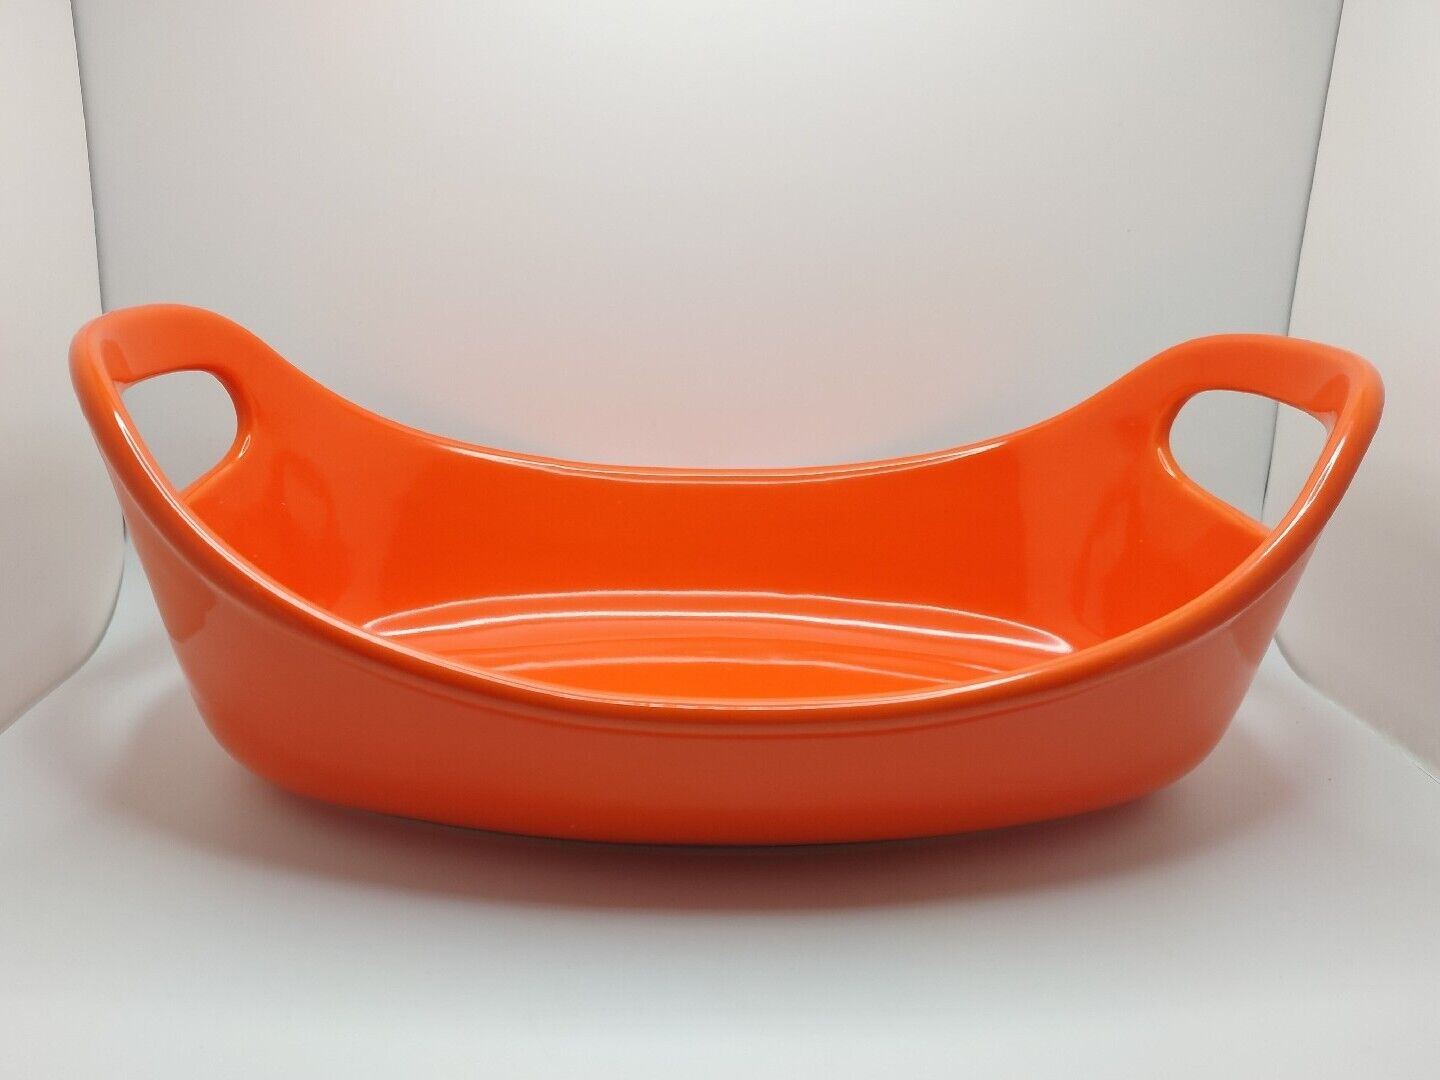 Rachael Ray Orange Casserole Oval Dish With Handles Bakeware 1.25 Quart 